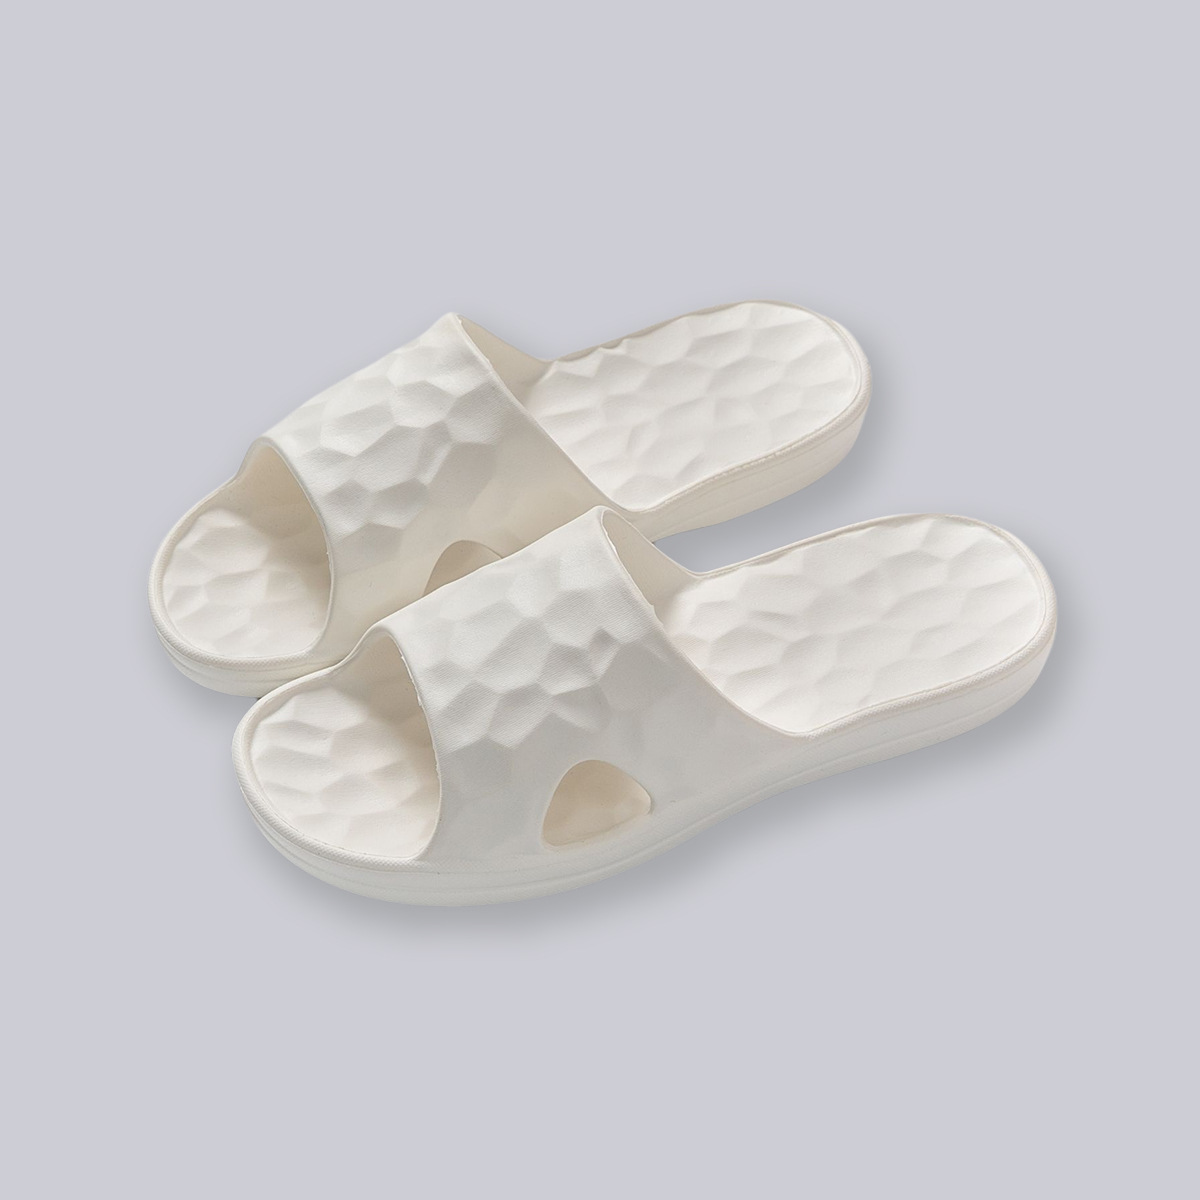 Antibacterial anti-slip couple slippers